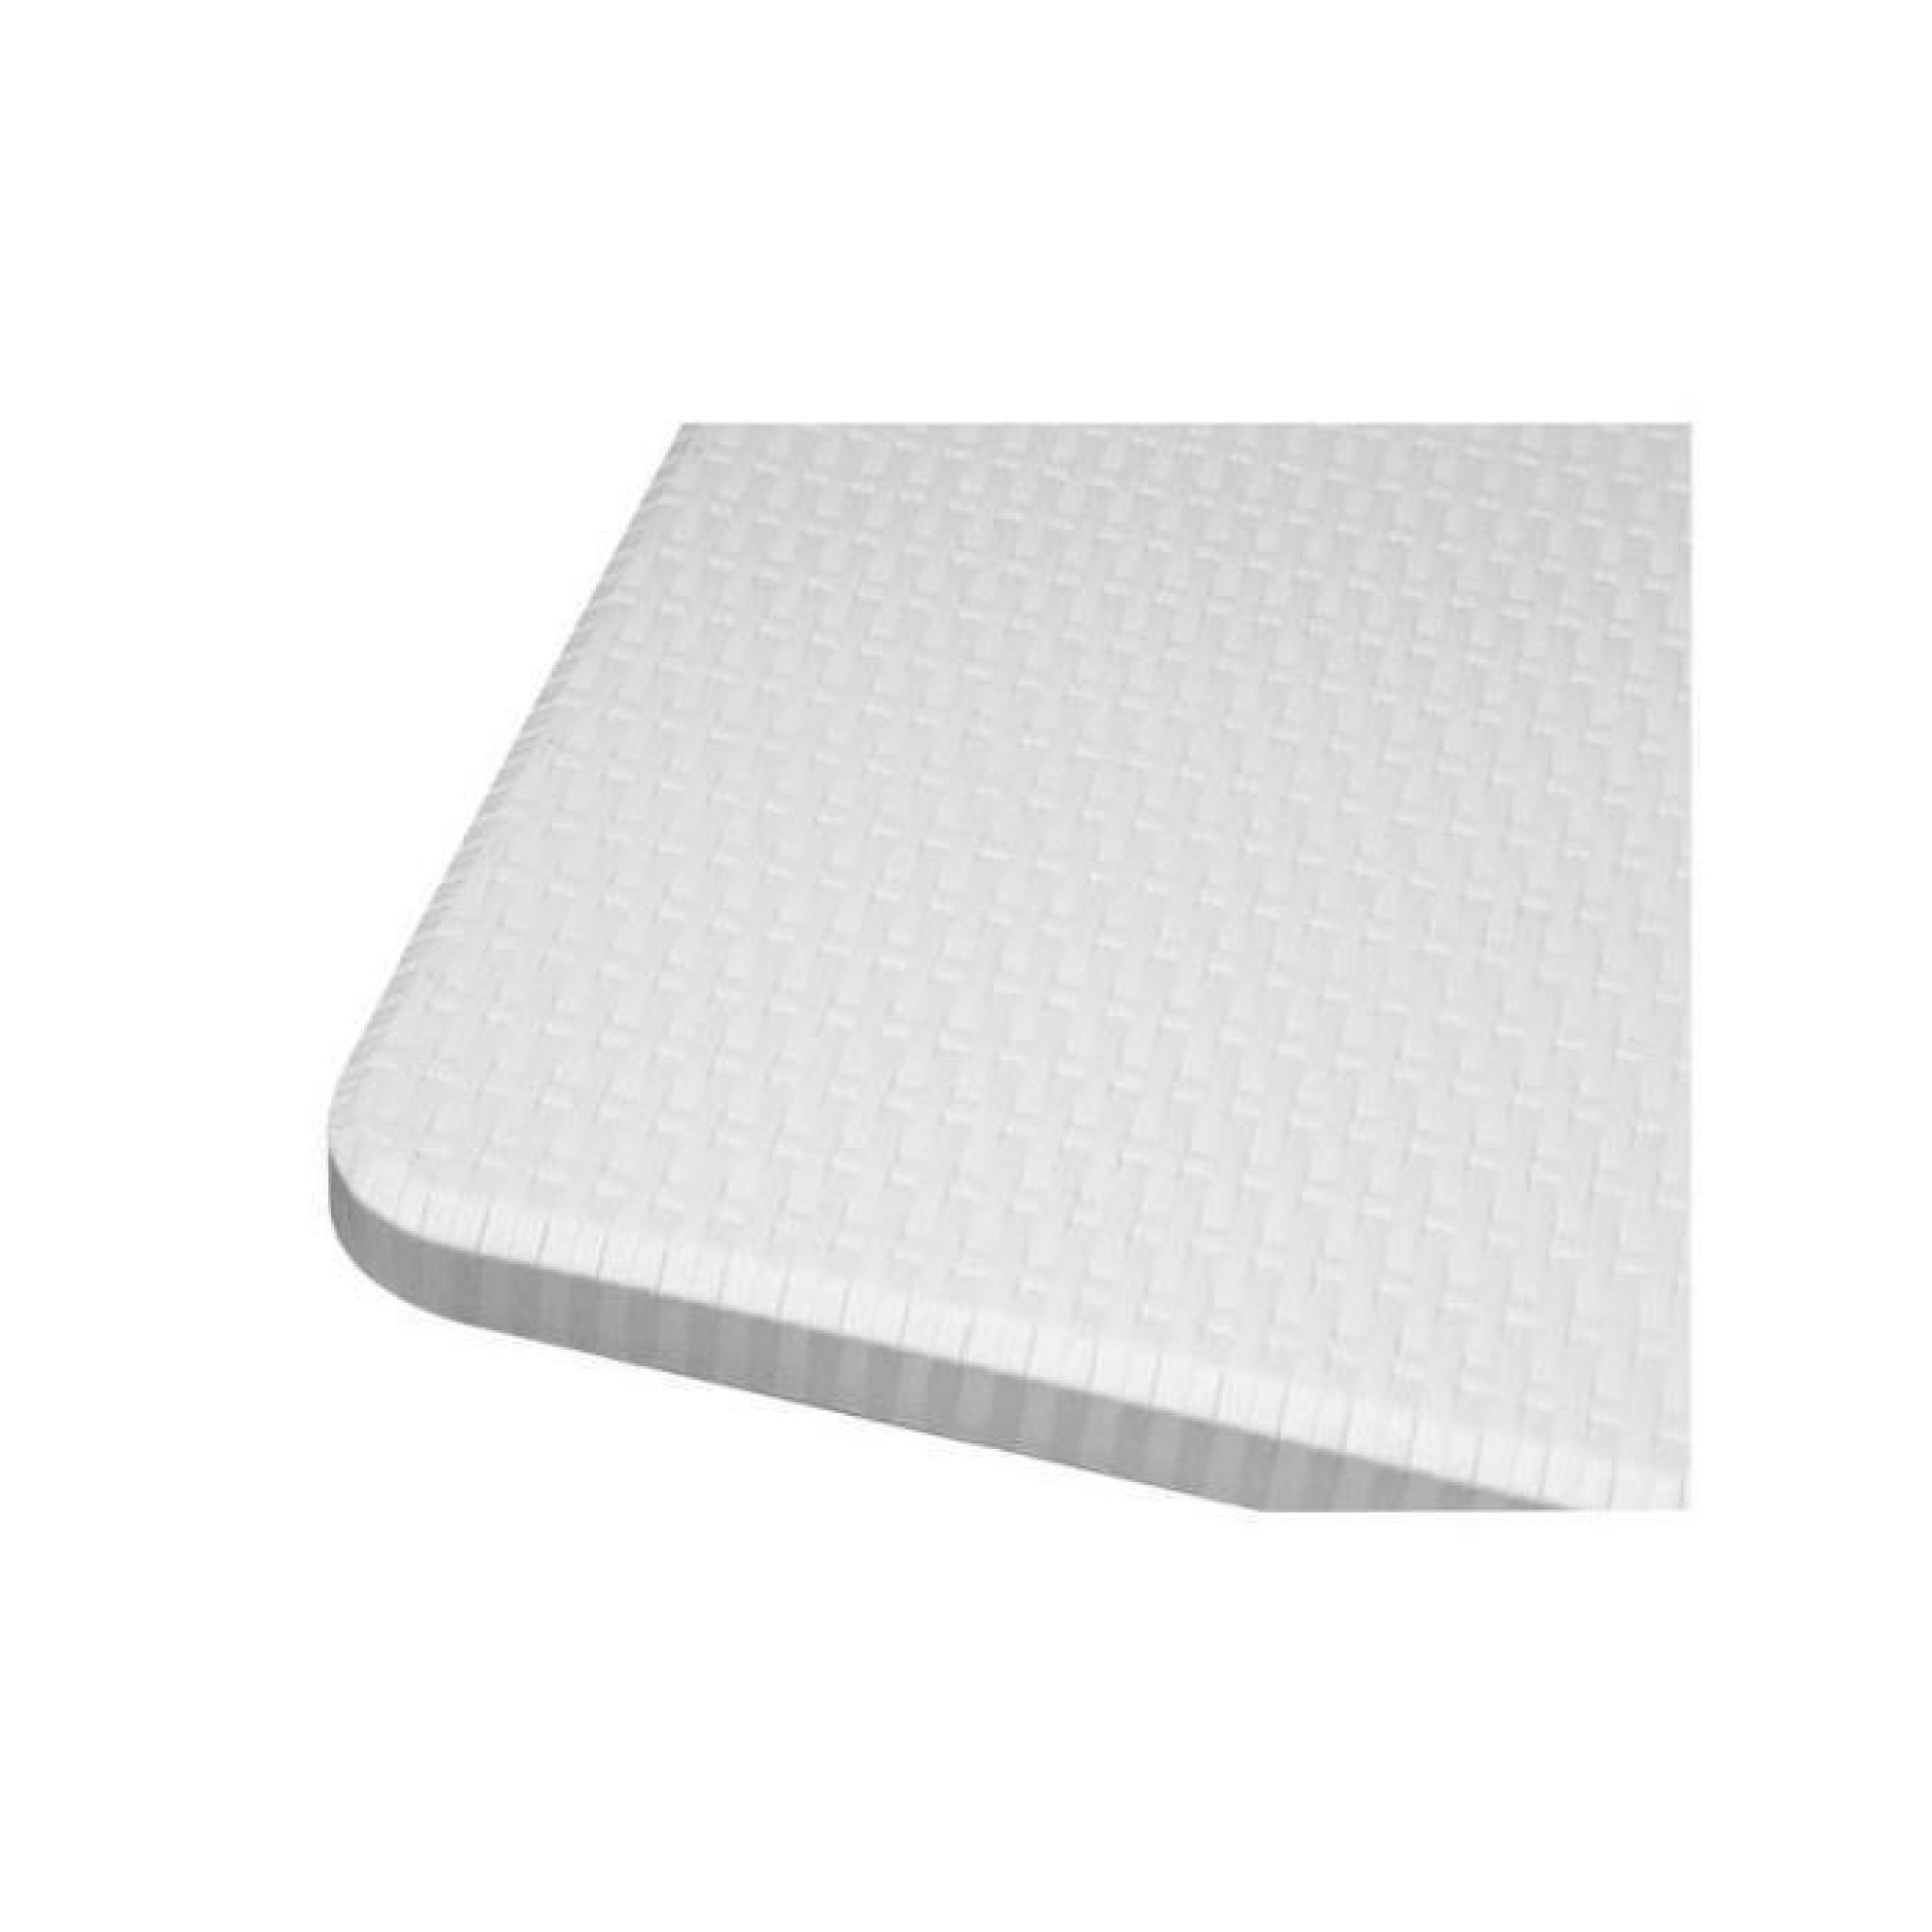 Table pliante - imitation rotin blanc - 180 cm pas cher